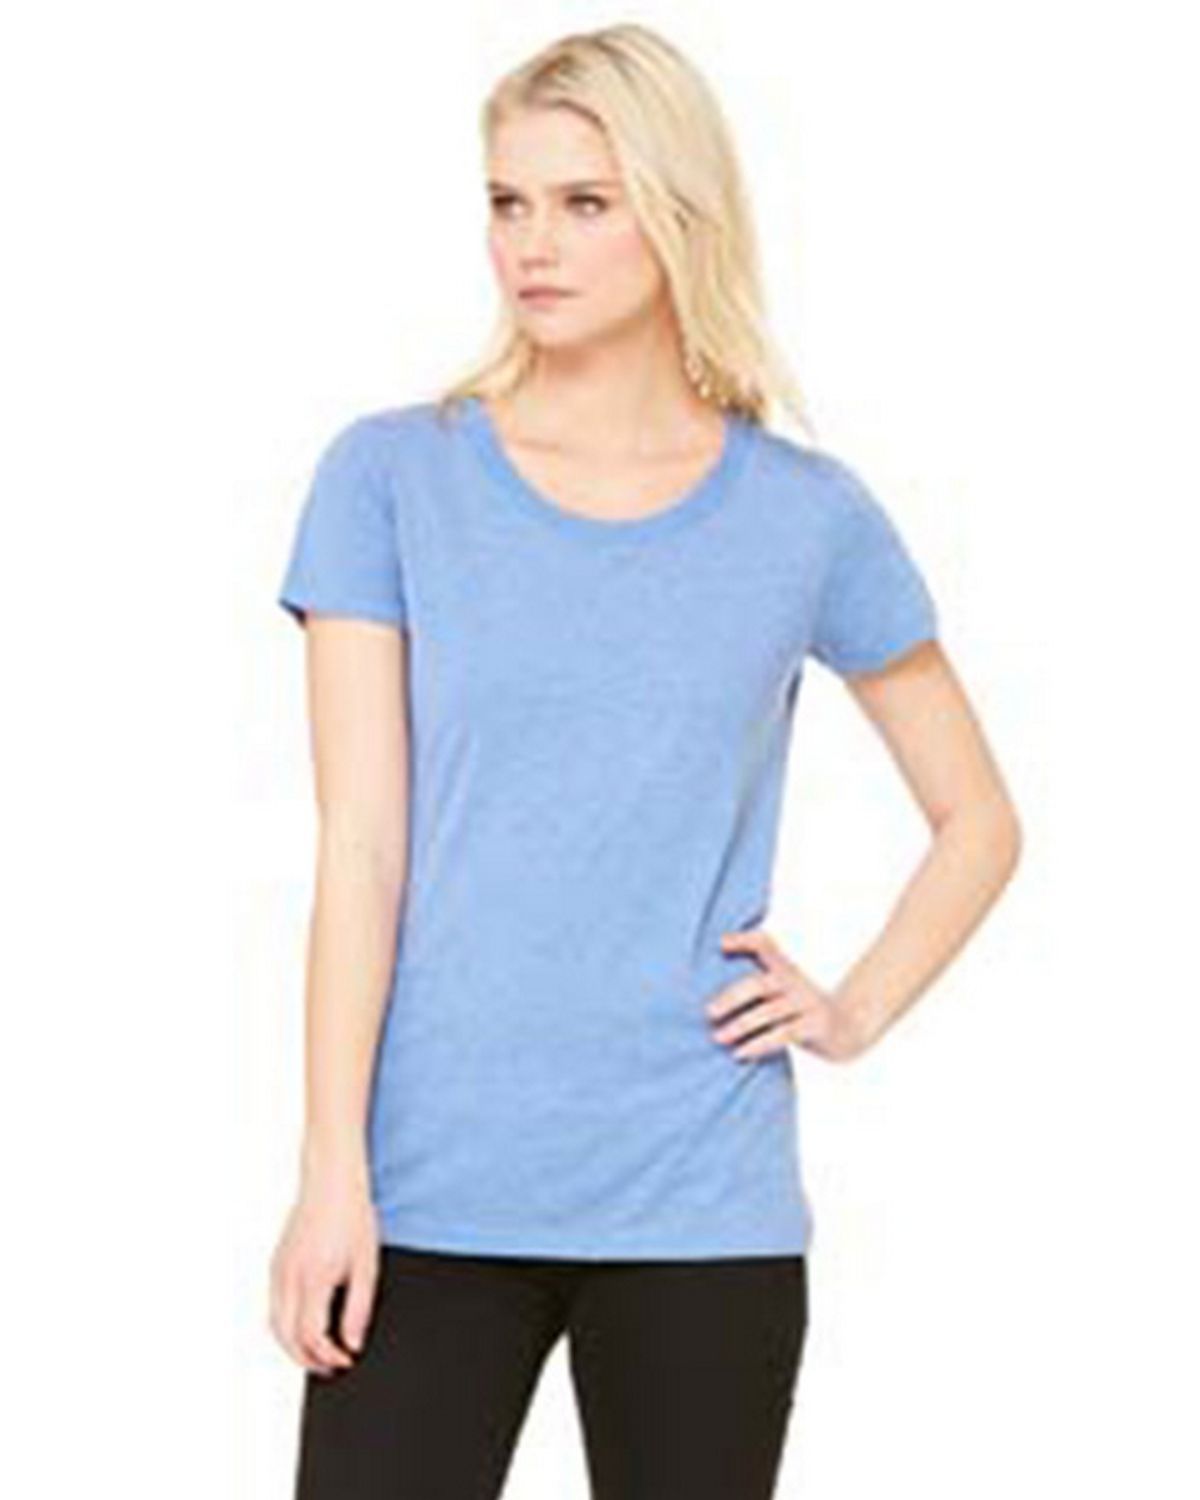 Blue Glitter St. Louis Blues Bella Canvas T-shirt in Black or White B8413  Design 27